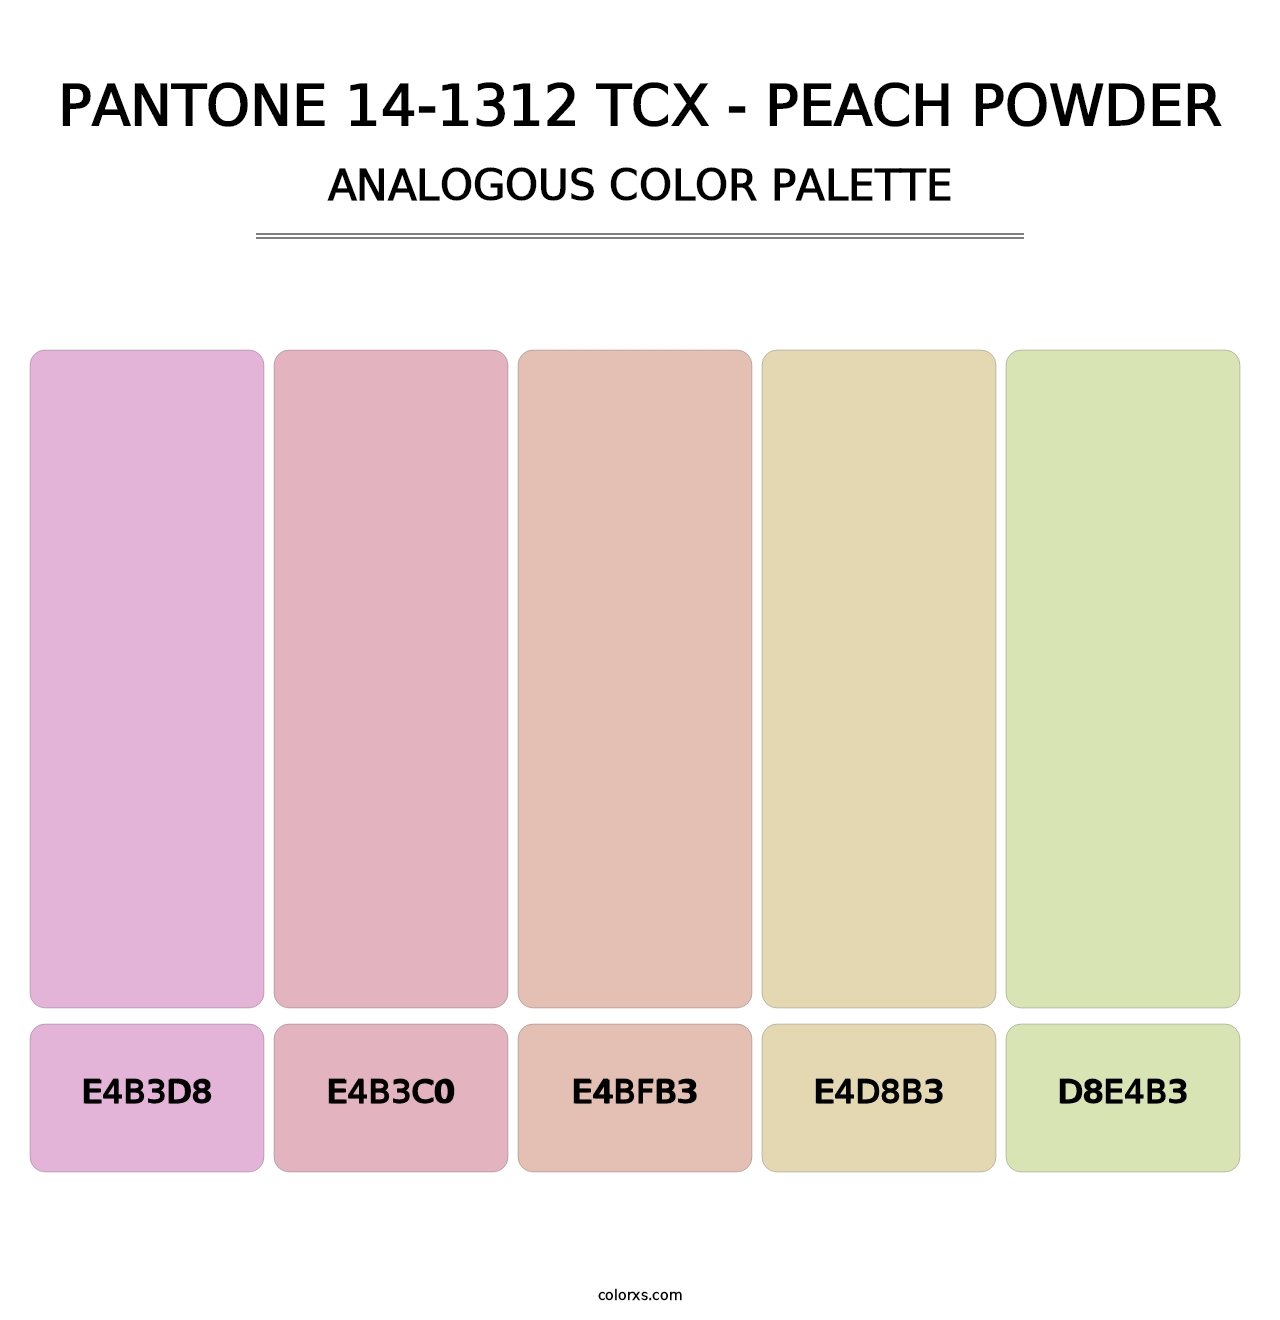 PANTONE 14-1312 TCX - Peach Powder - Analogous Color Palette